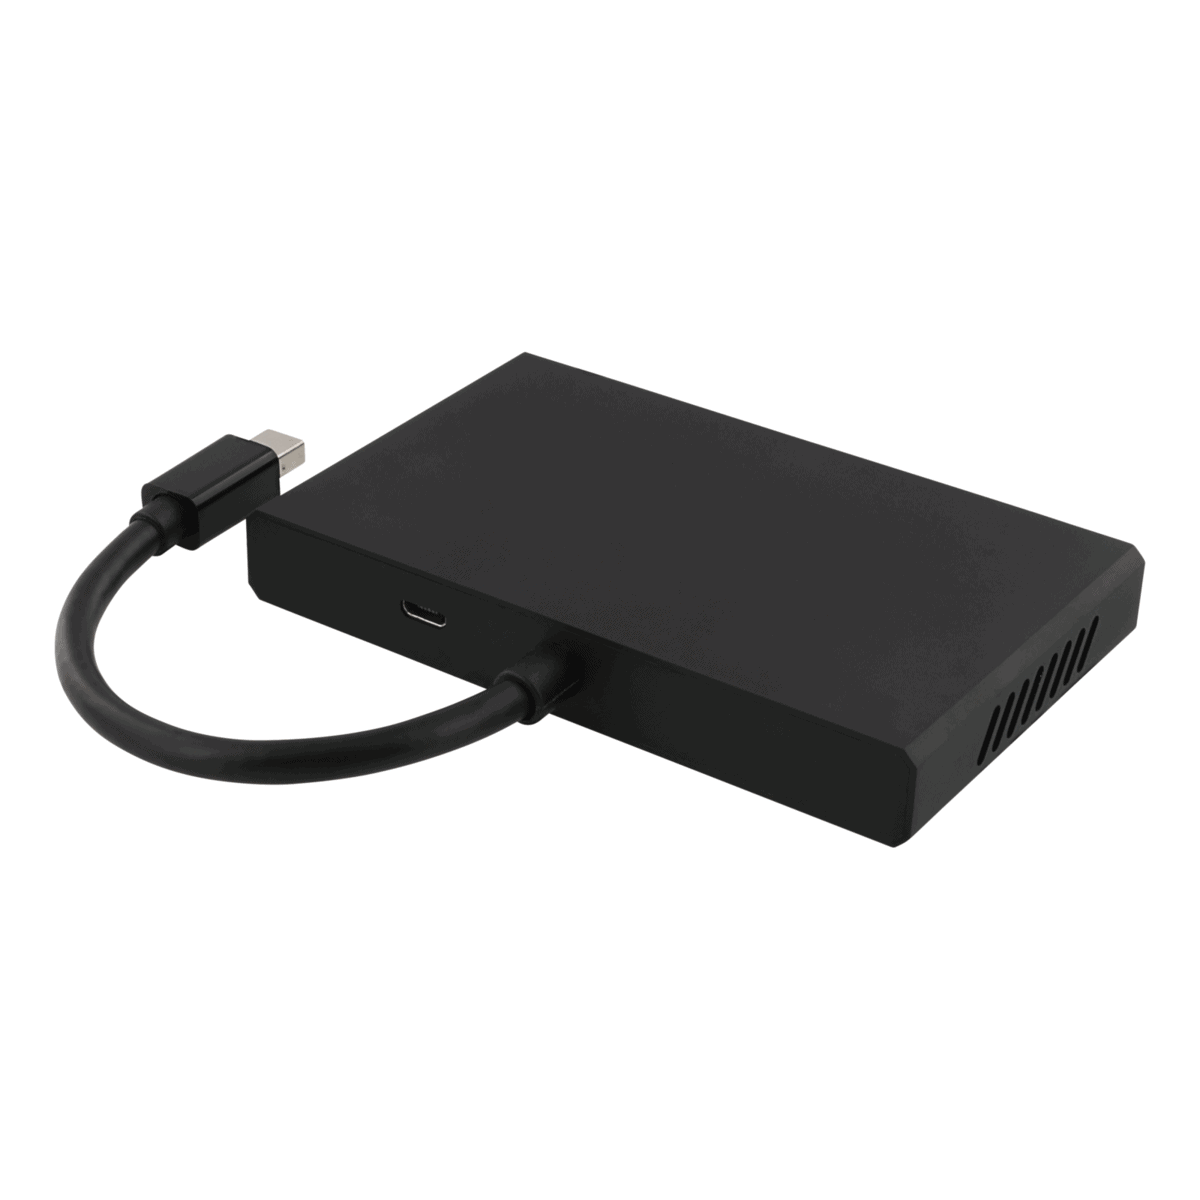 DELTACO USB 3.1 Gen 1 -hubi, 4 porttia, muovia, musta | UH-475